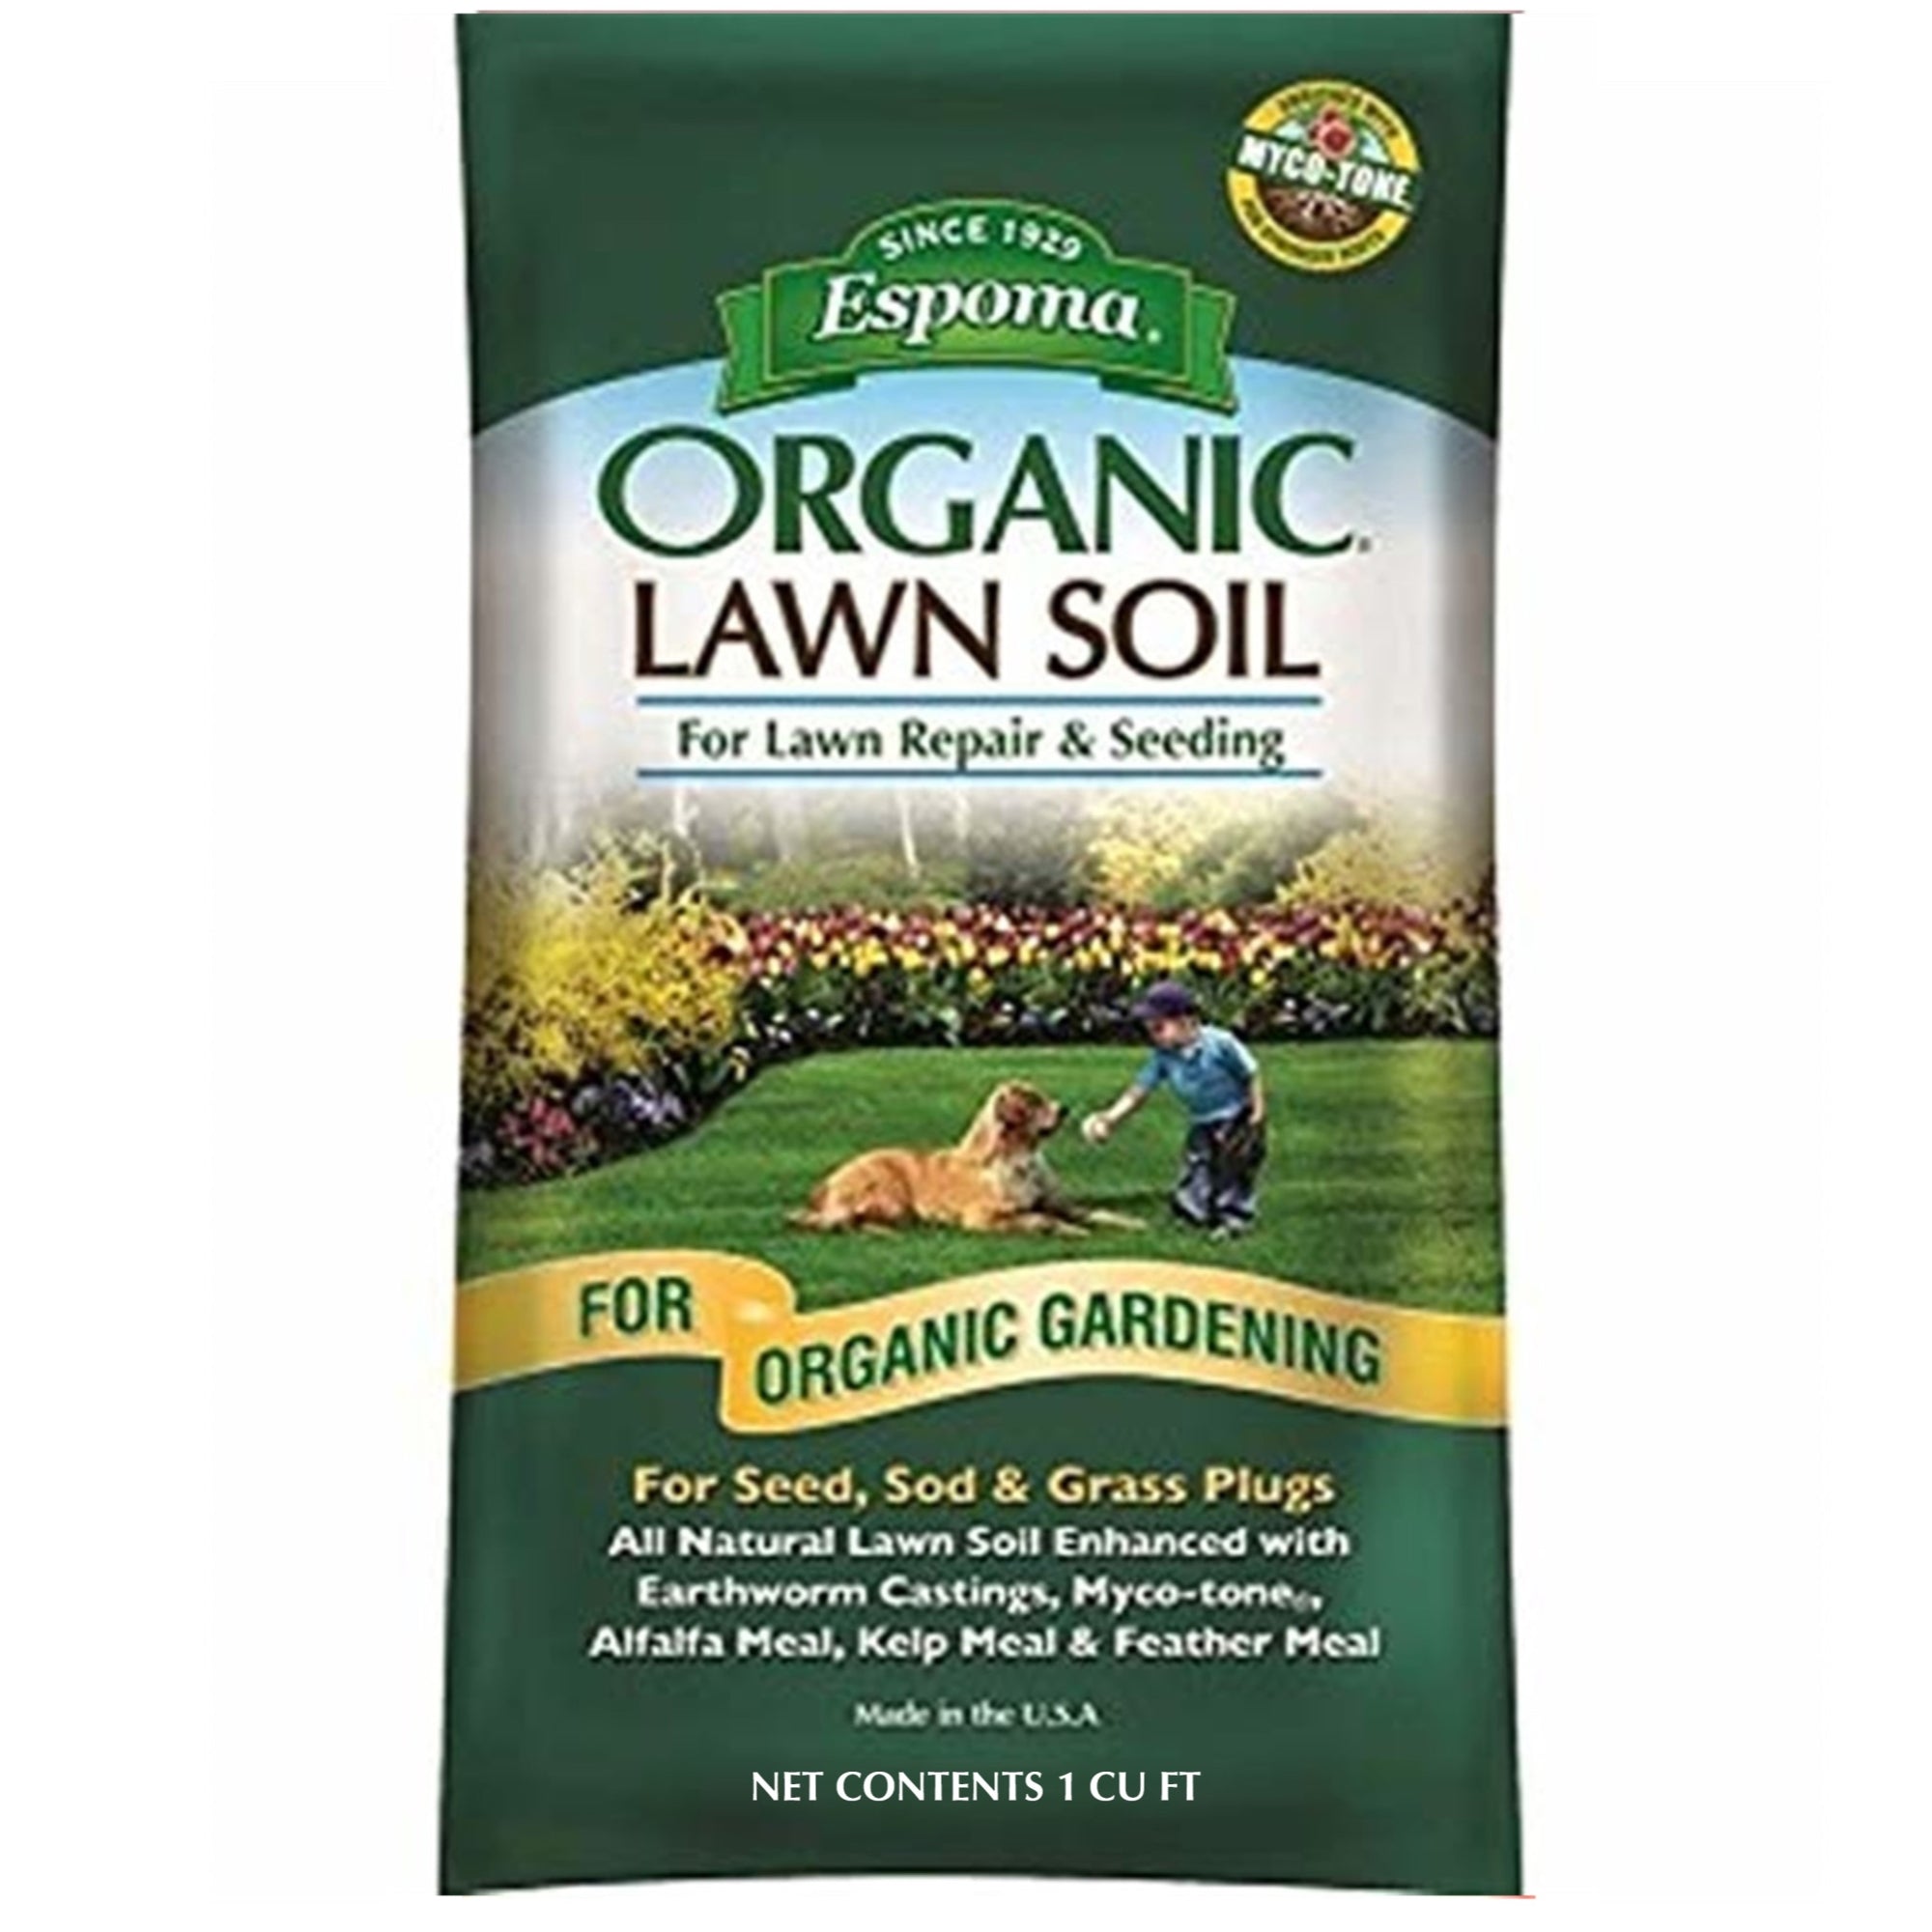 Espoma Organic Lawn Soil for Repair & Seeding, for Seed, Sod & Grass Plugs, 1 cu ft